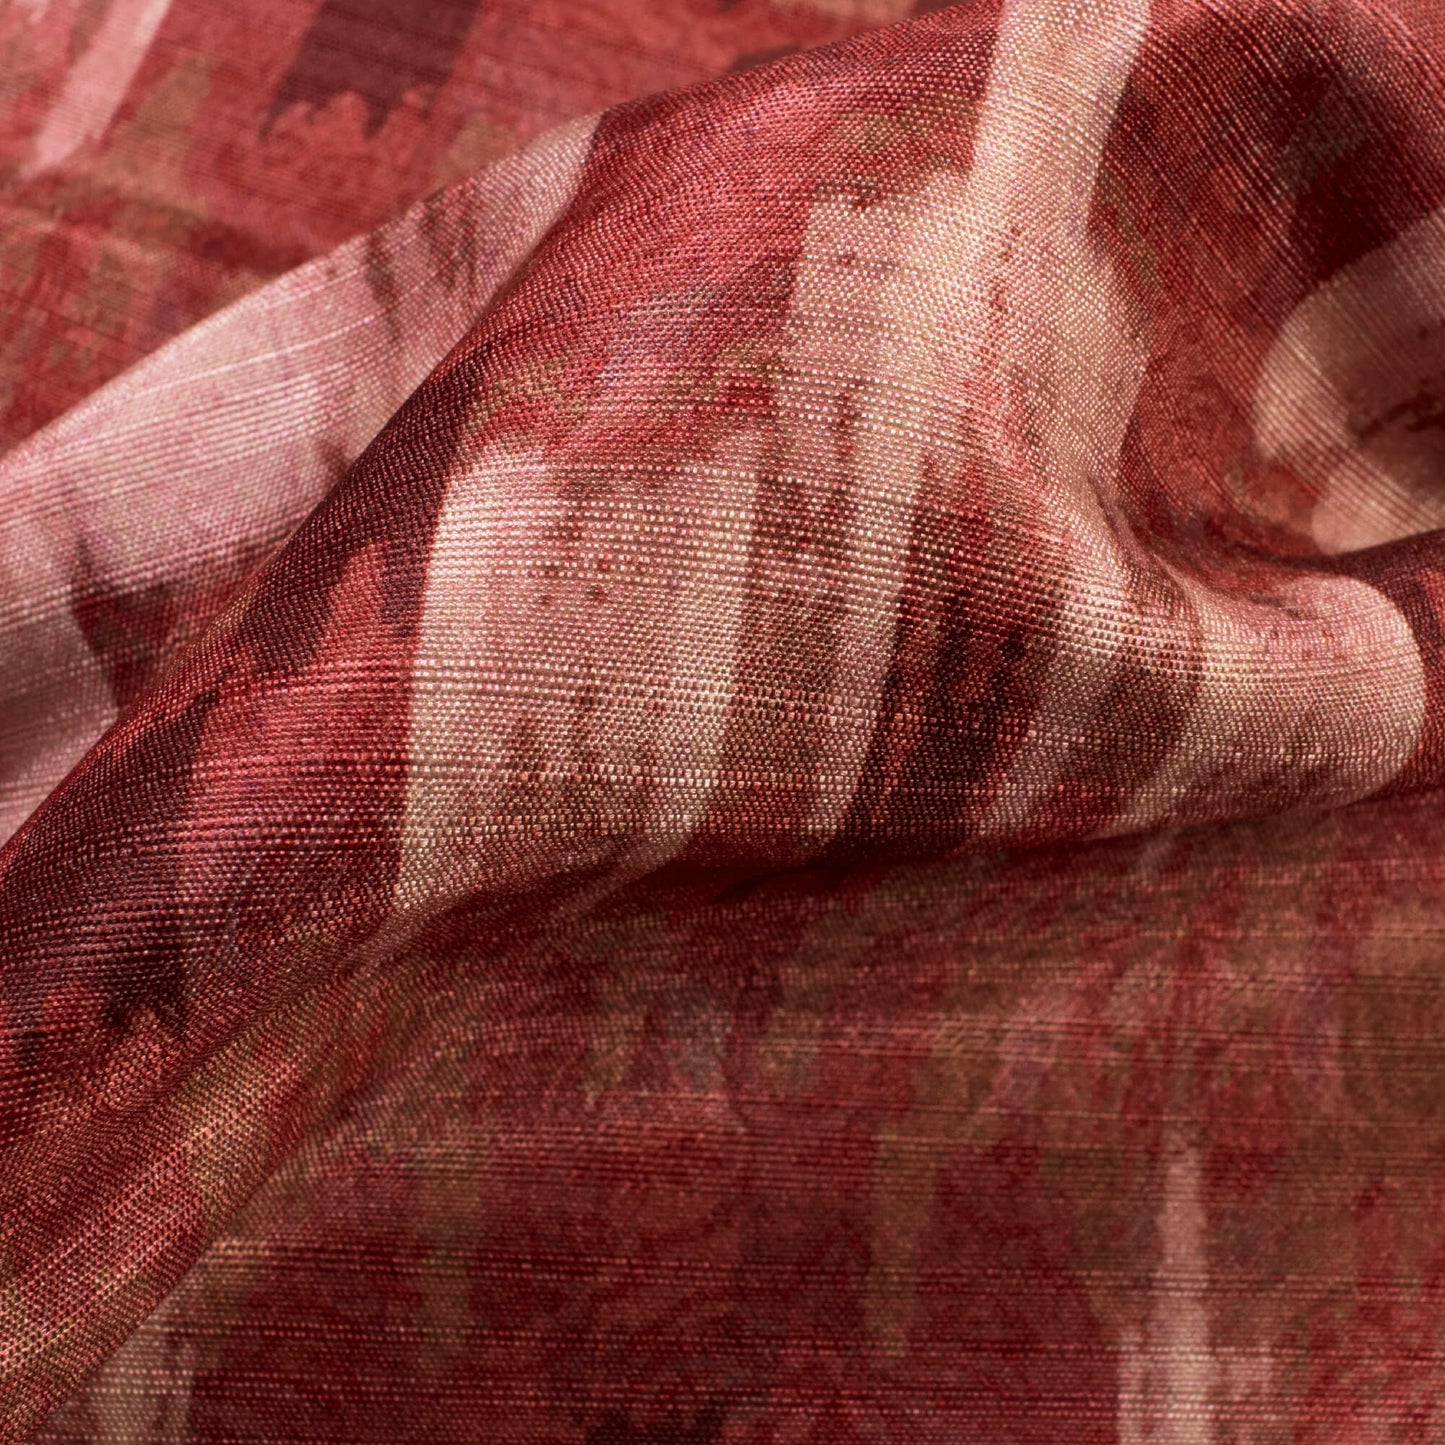 Mahogany Red And Peach Abstract Pattern Digital Print Silk Fabric